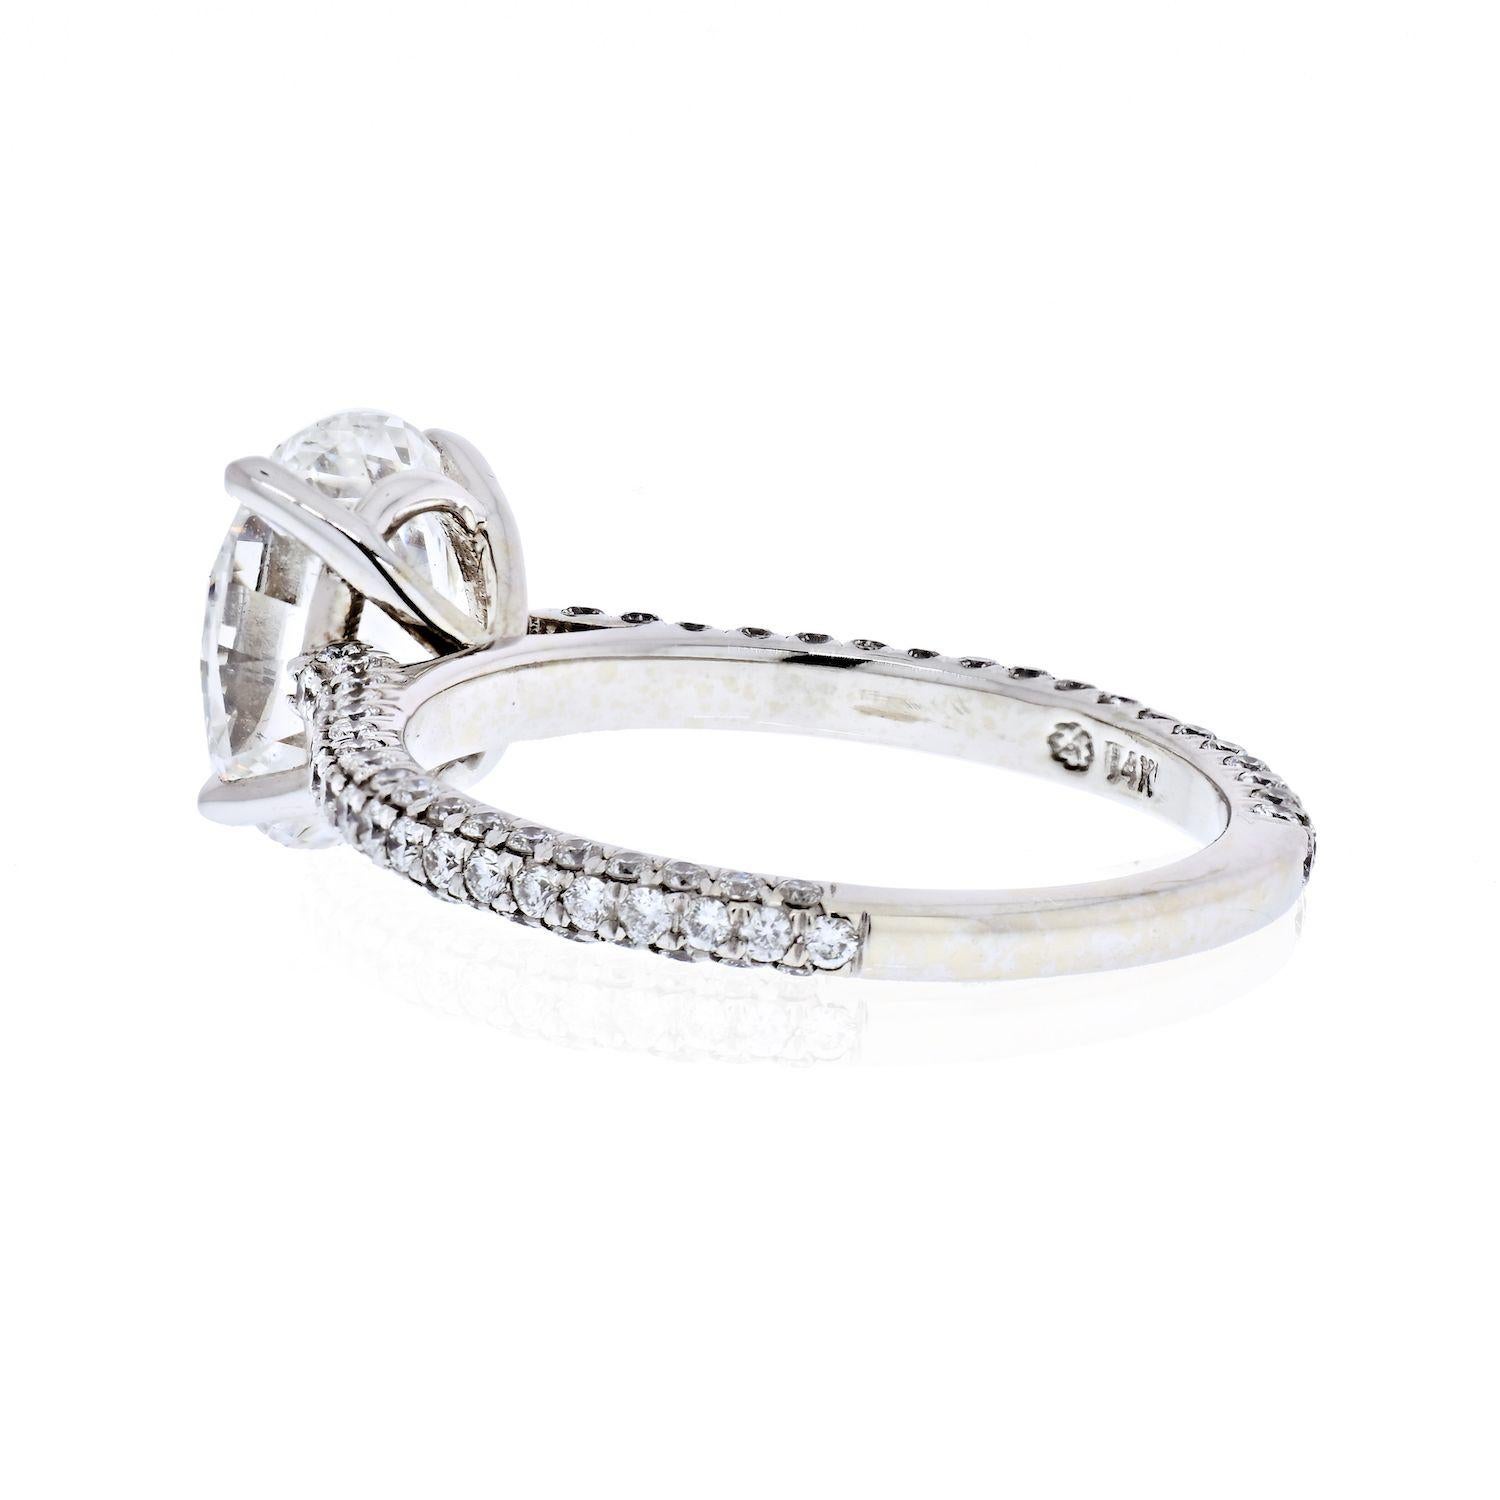 2 carat oval diamond ring price